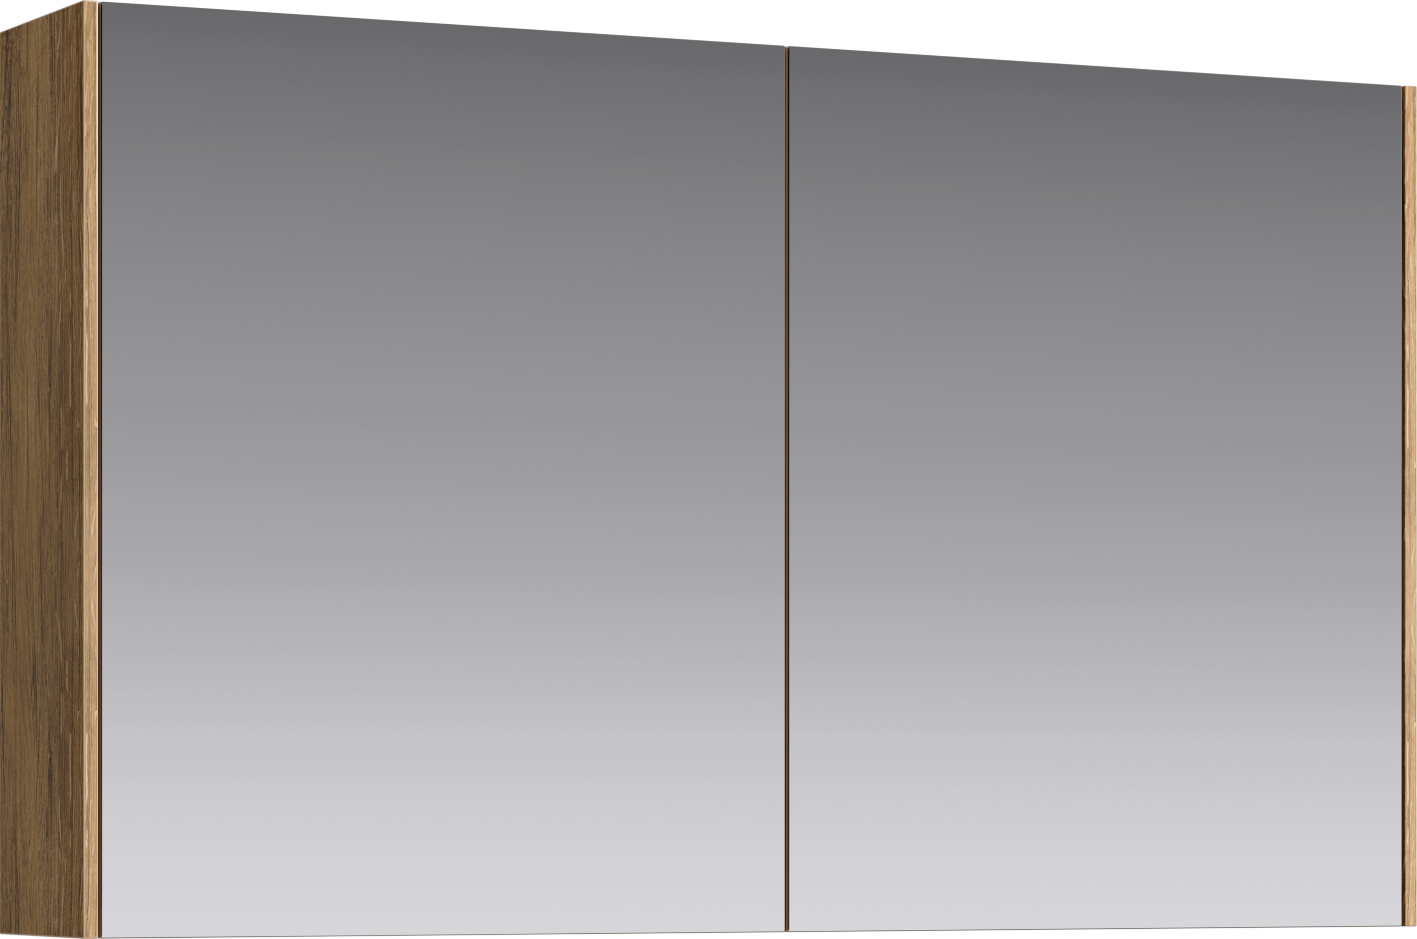 Сменный элемент Aqwella 5 stars Mobi для зеркала-шкафа, дуб балтийский, 2 шт.